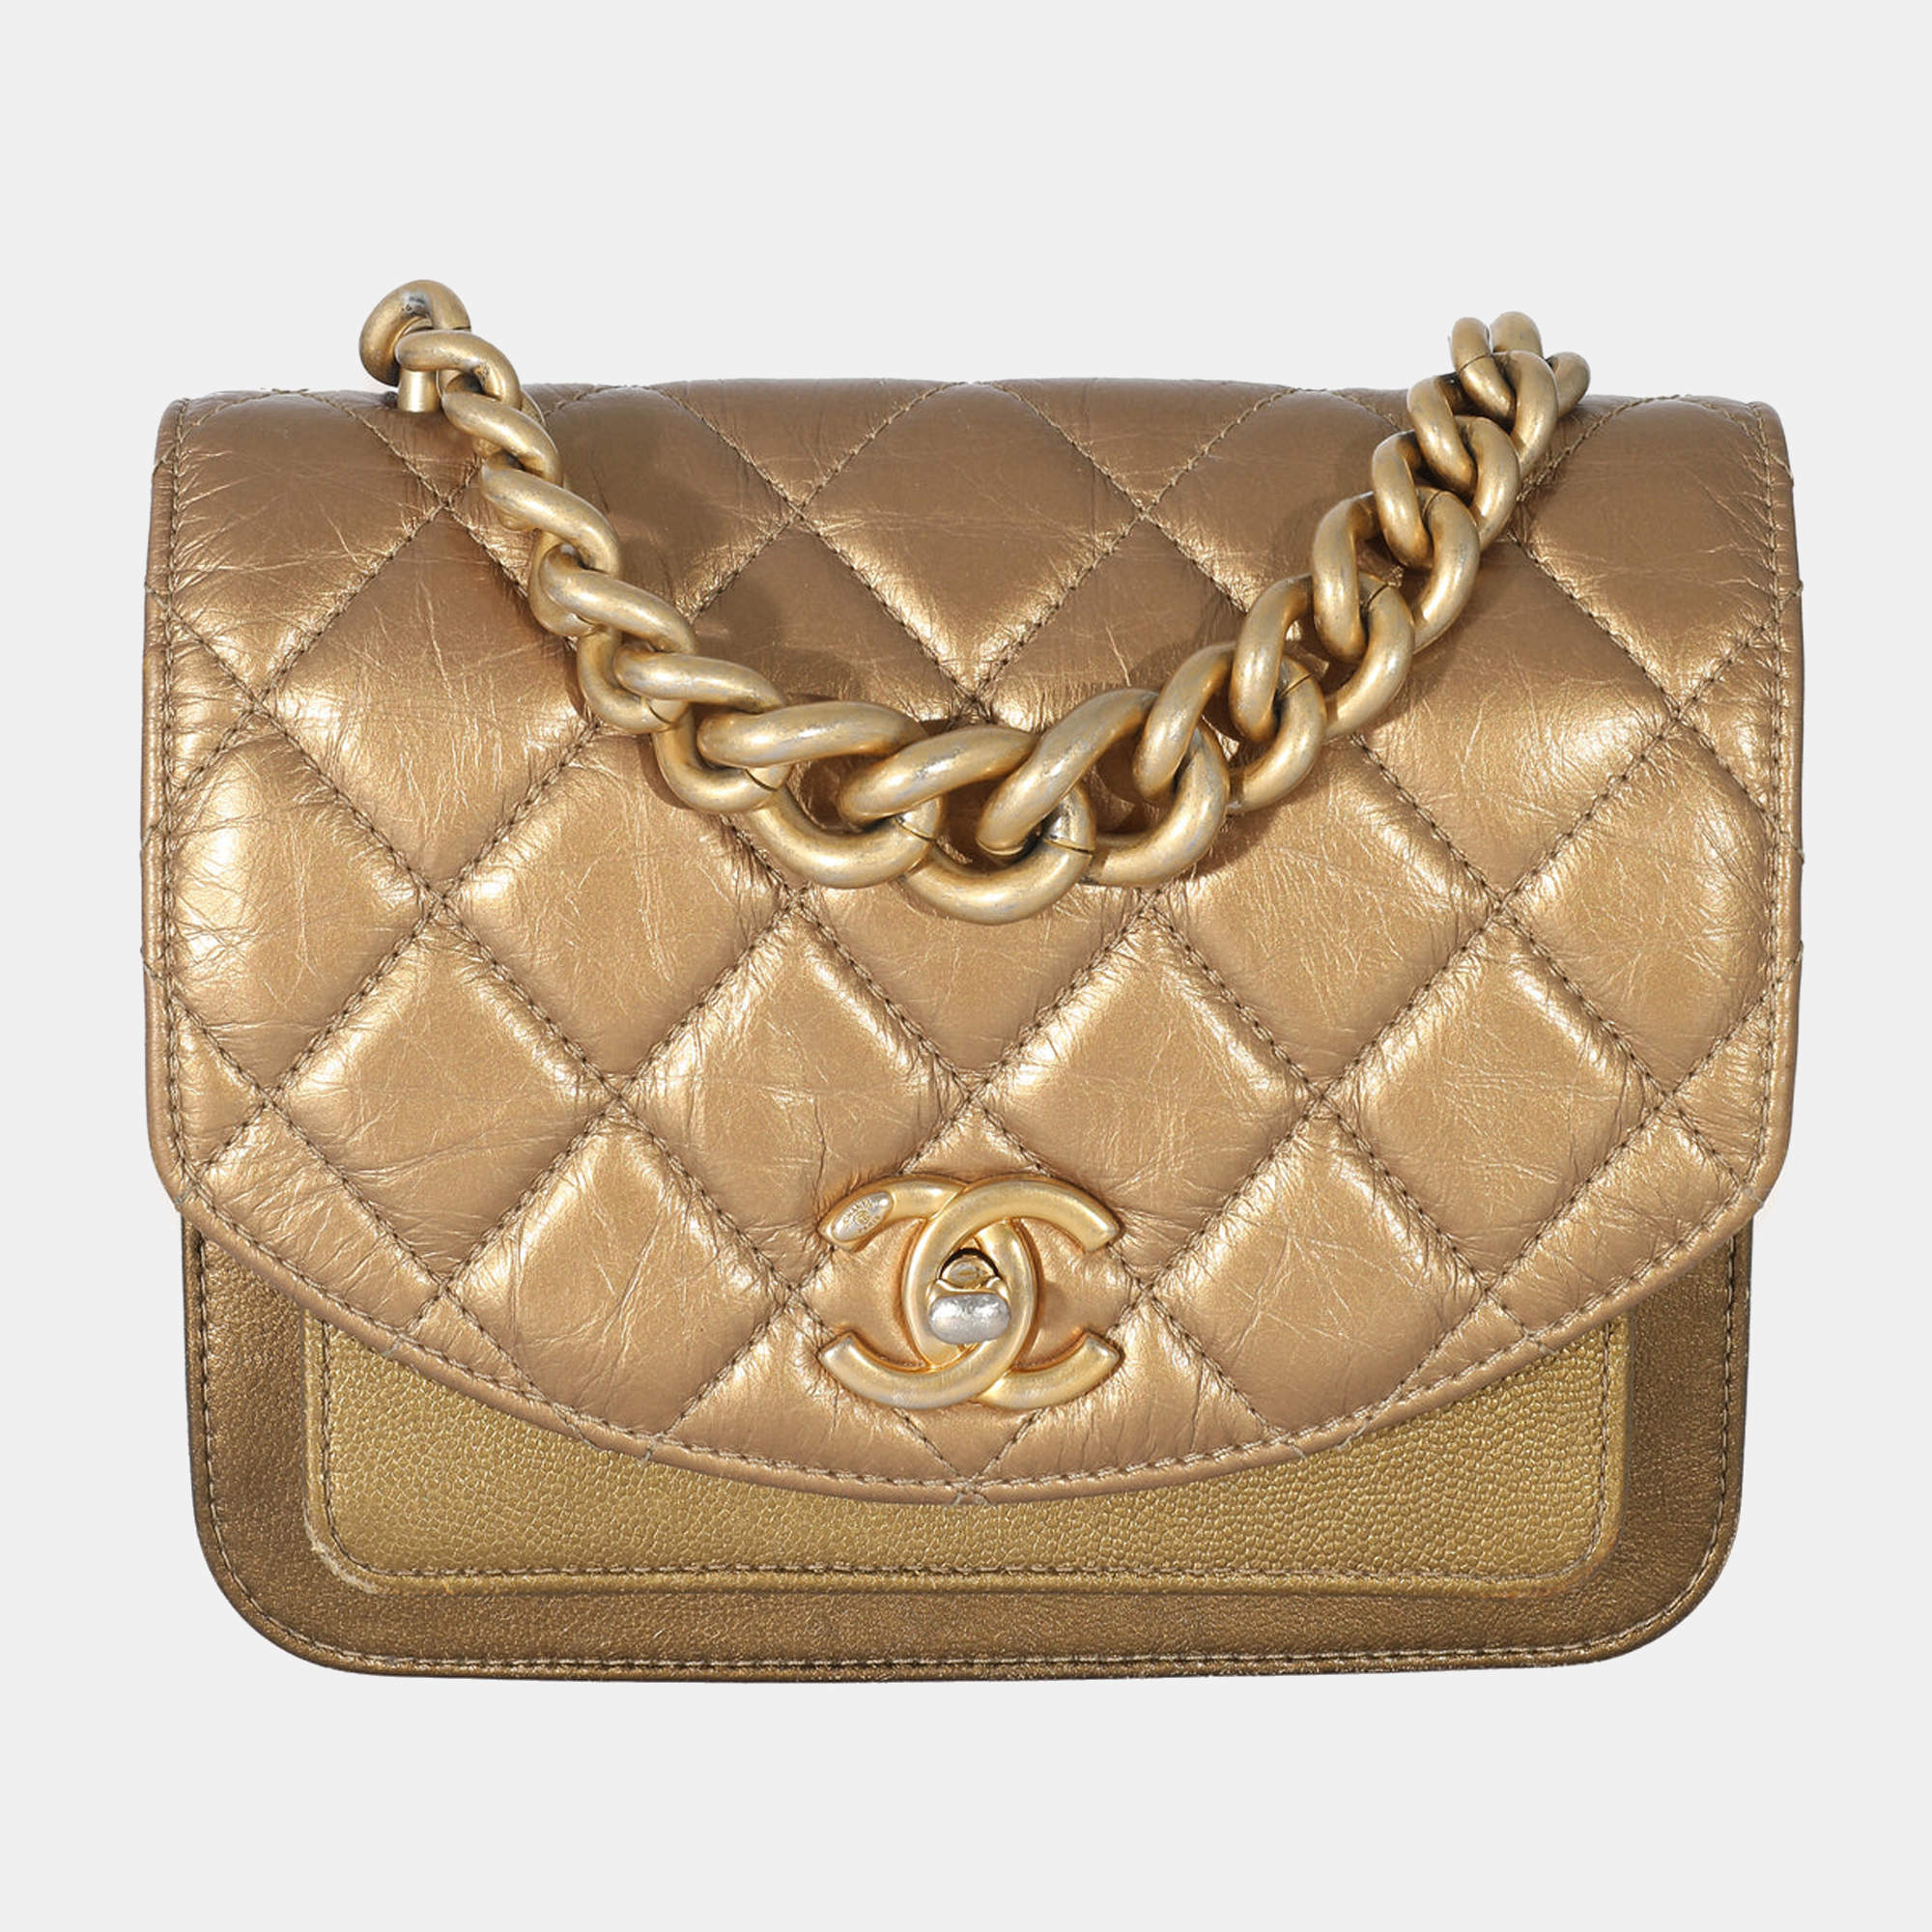 Chanel Gold Metallic Leather Mini Chain Handle Flap Bag Chanel